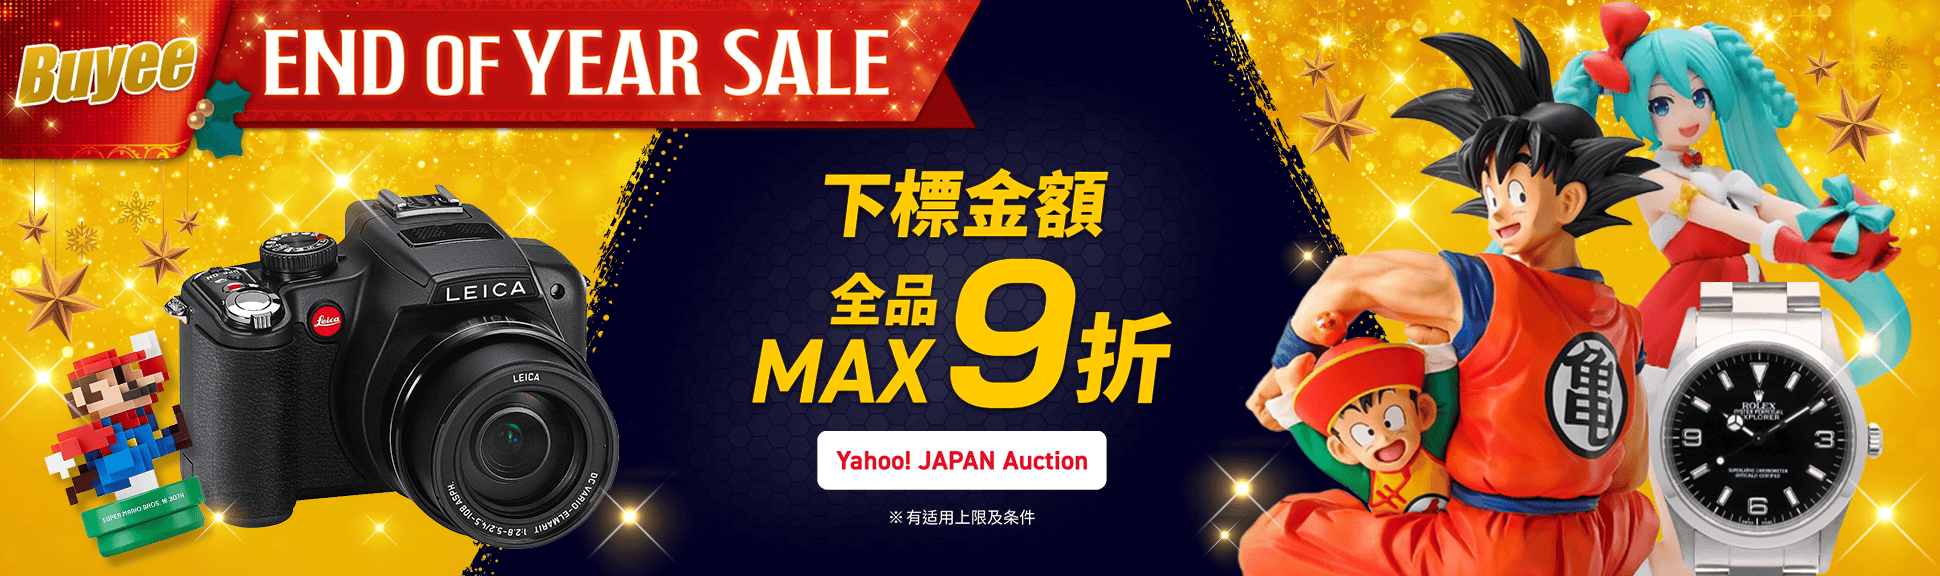 Buyee End of Year Sale!商品金額MAX9折  期間限定超值優惠券驚喜發放中！